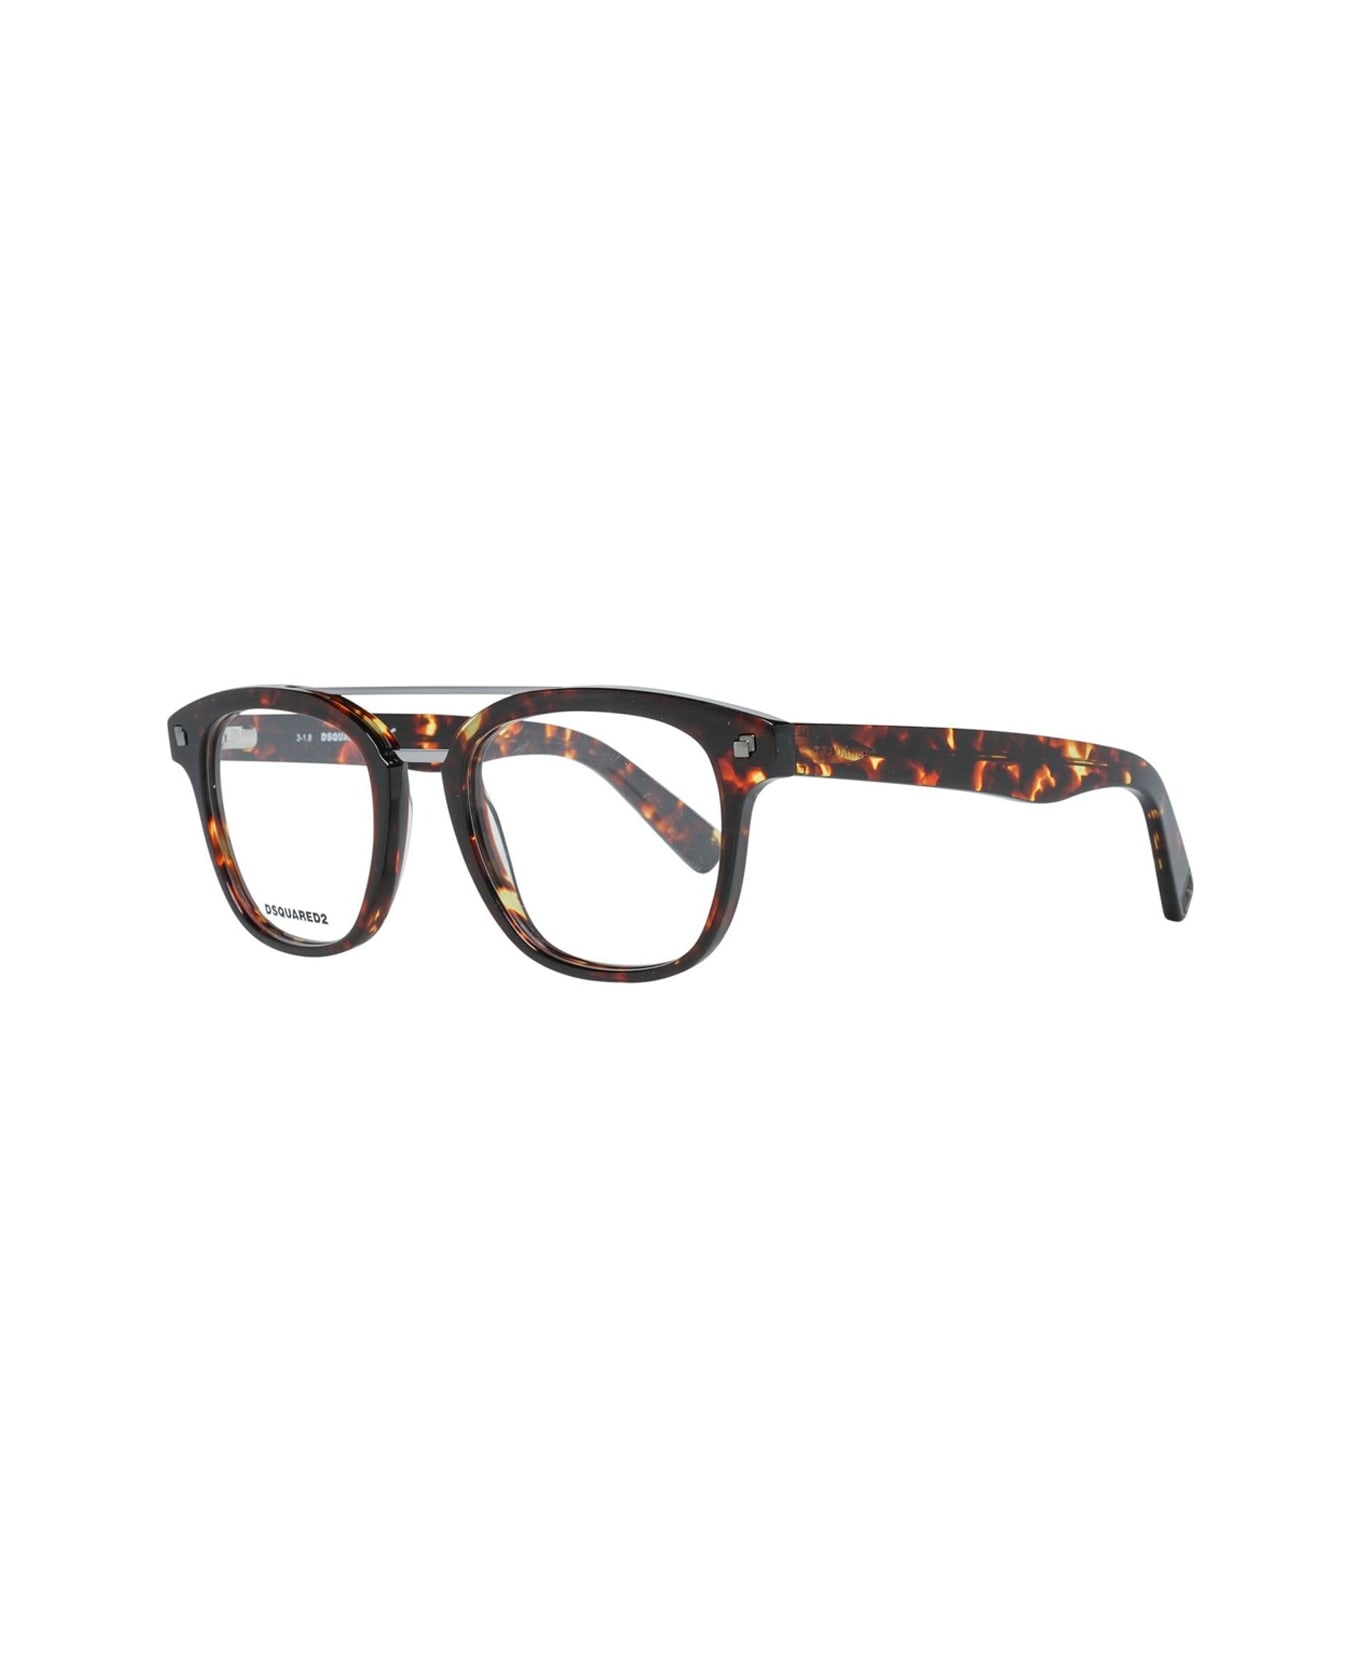 Dsquared2 Eyewear Dq5232 Glasses - Marrone アイウェア